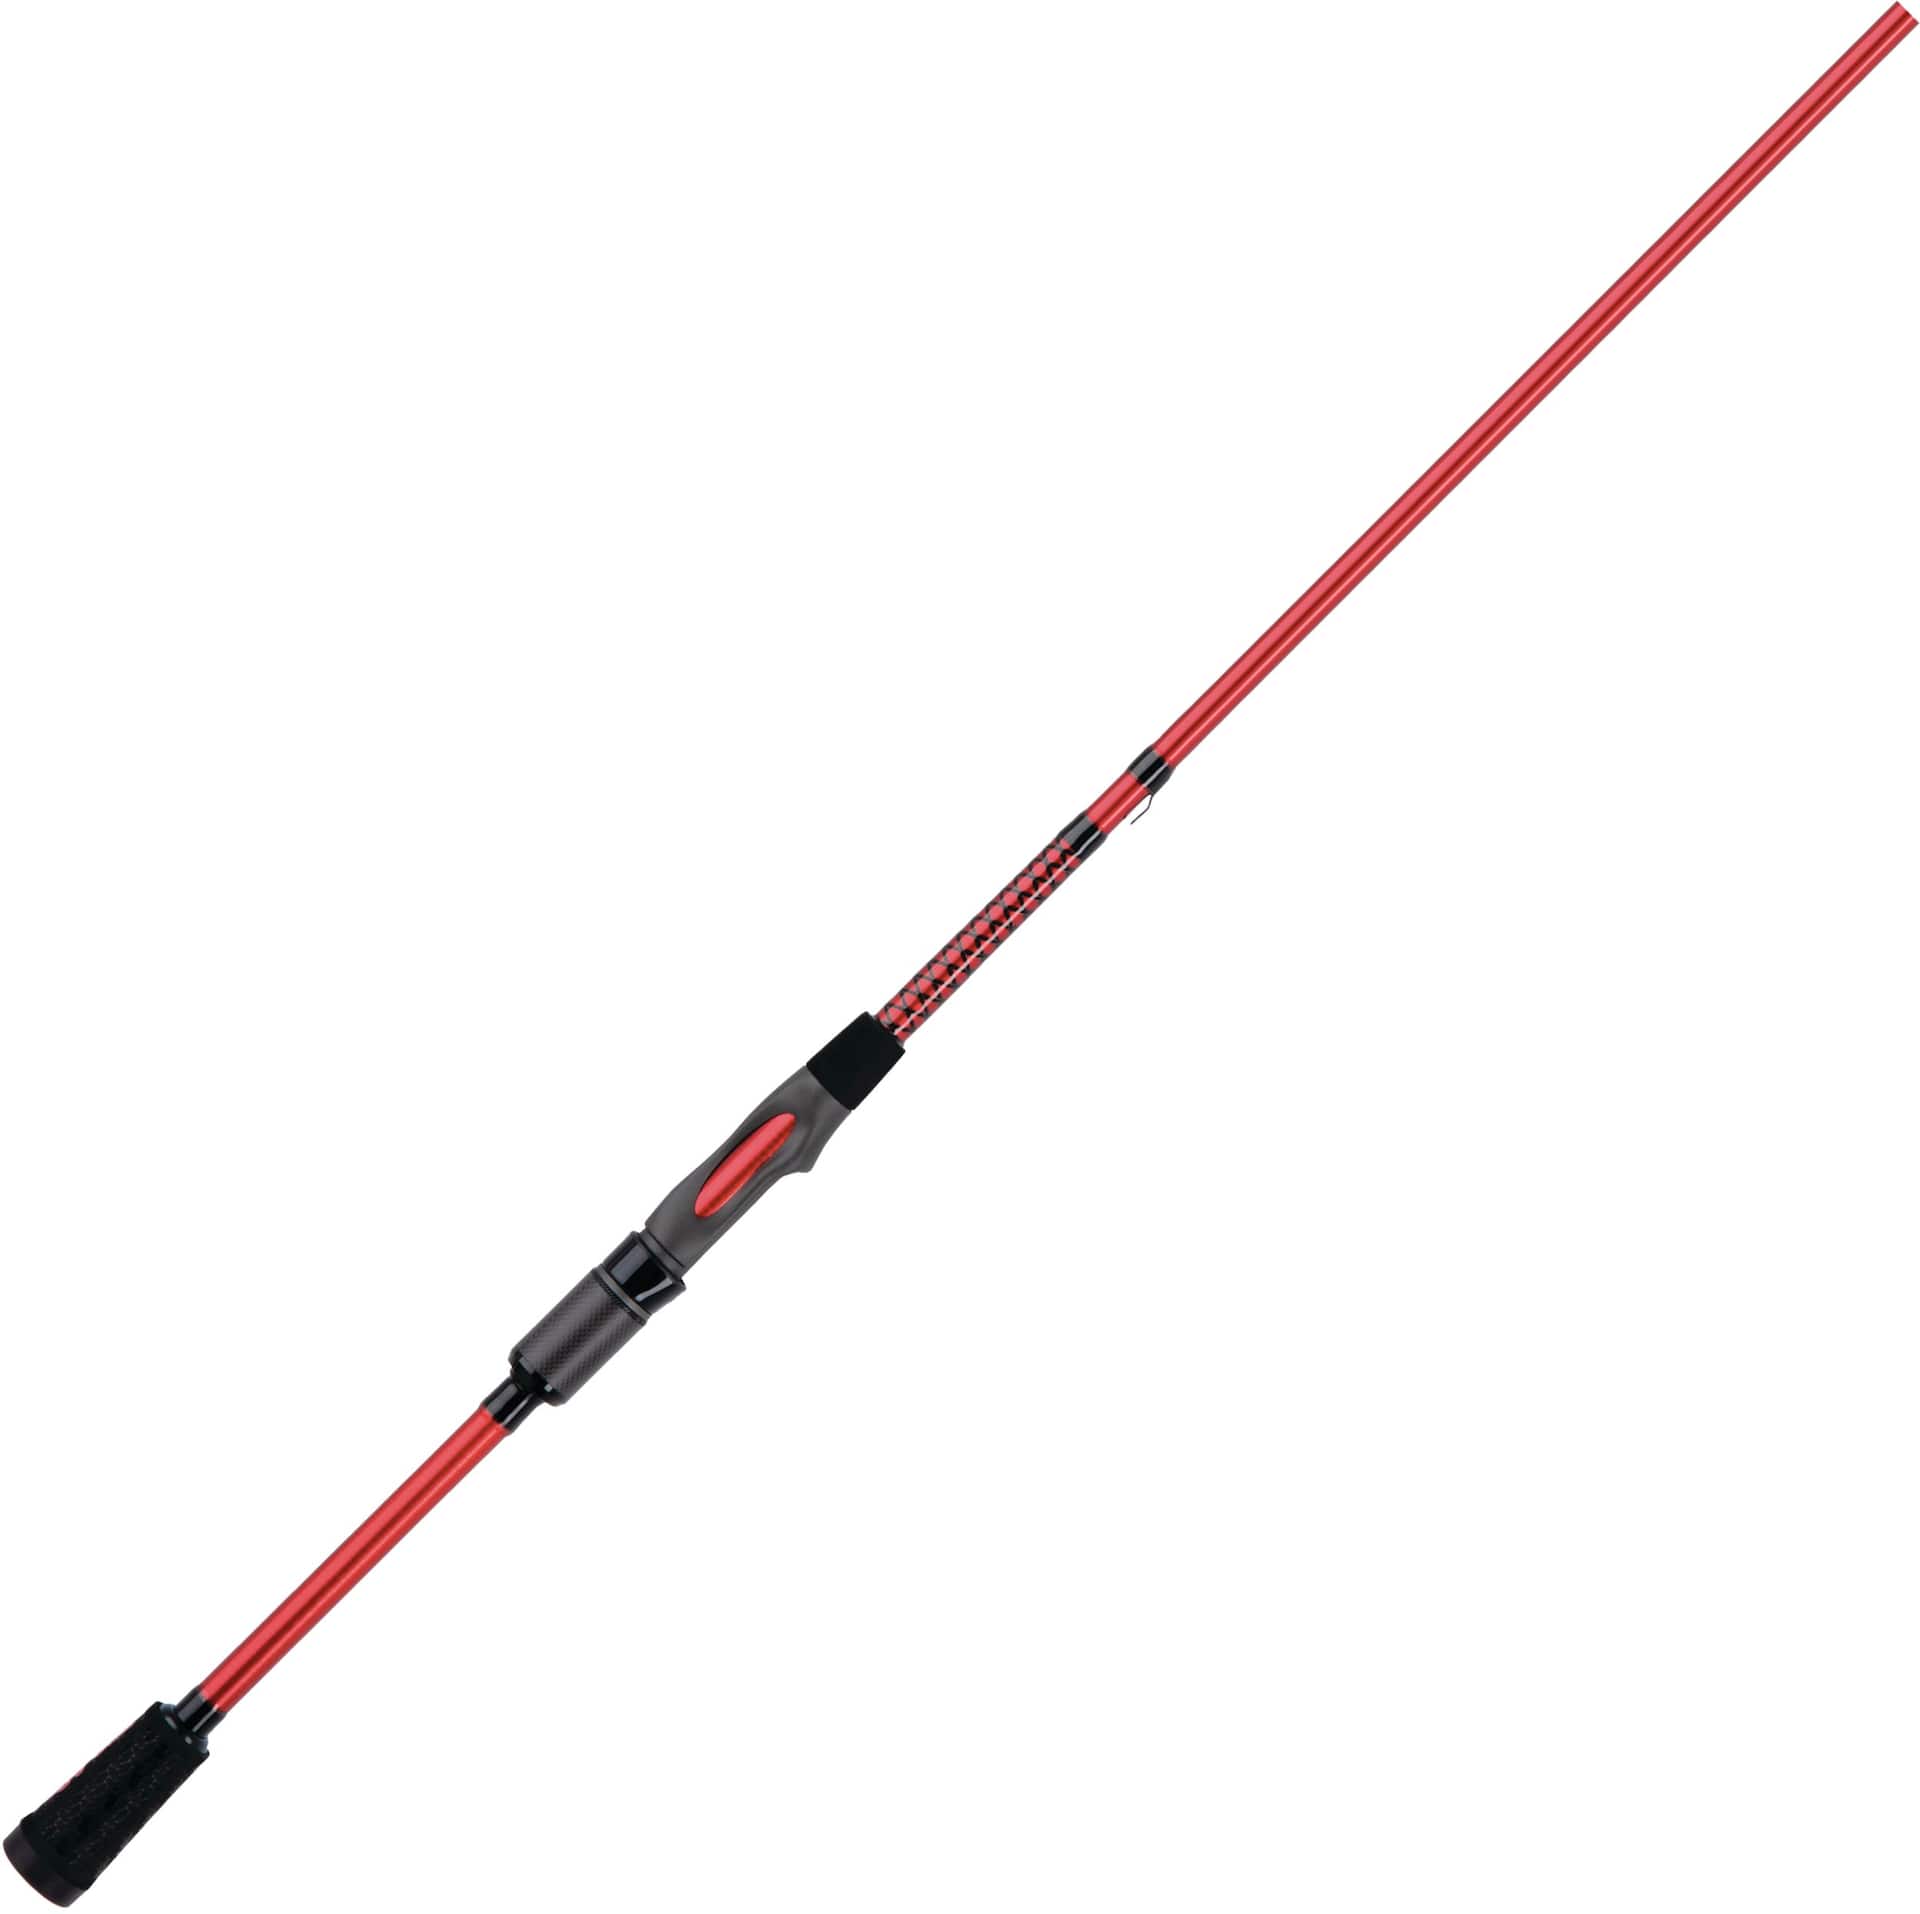 Ugly Stik Carbon Spinning Fishing Rods, Lightweight, Medium, 6.6